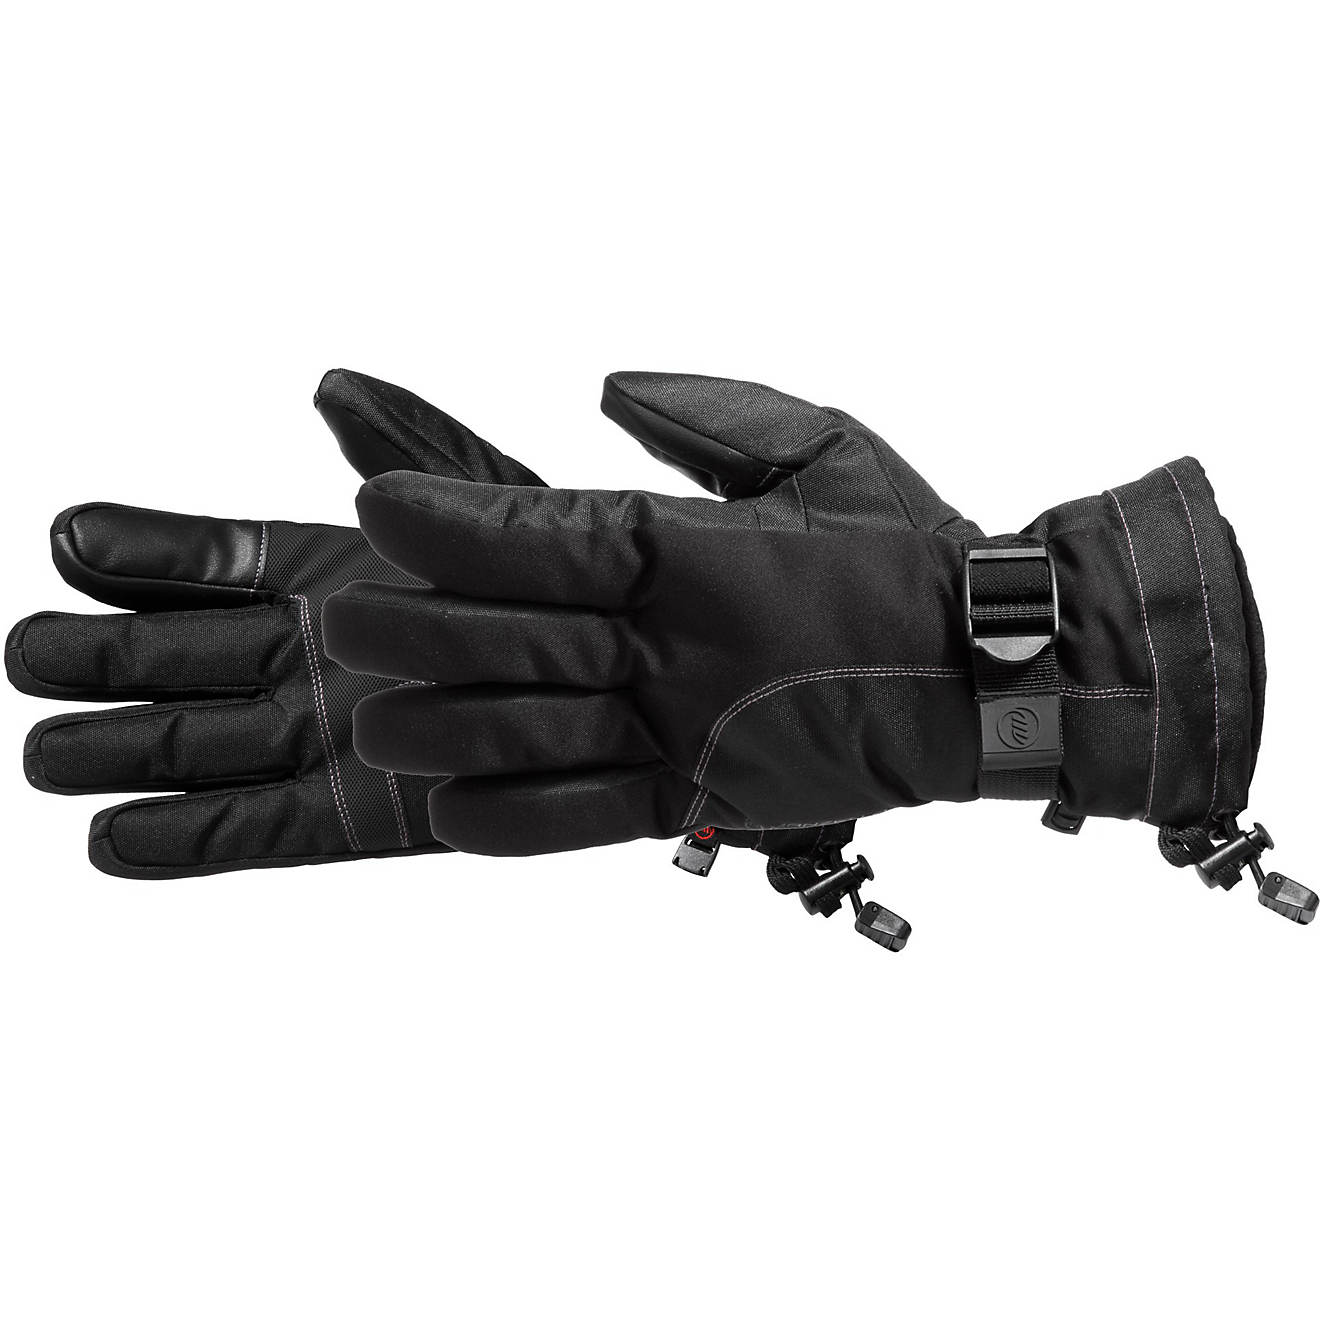 Buffalo Camo Leather Motorcycle Gloves Motorbike Protection Waterproof Windproof 